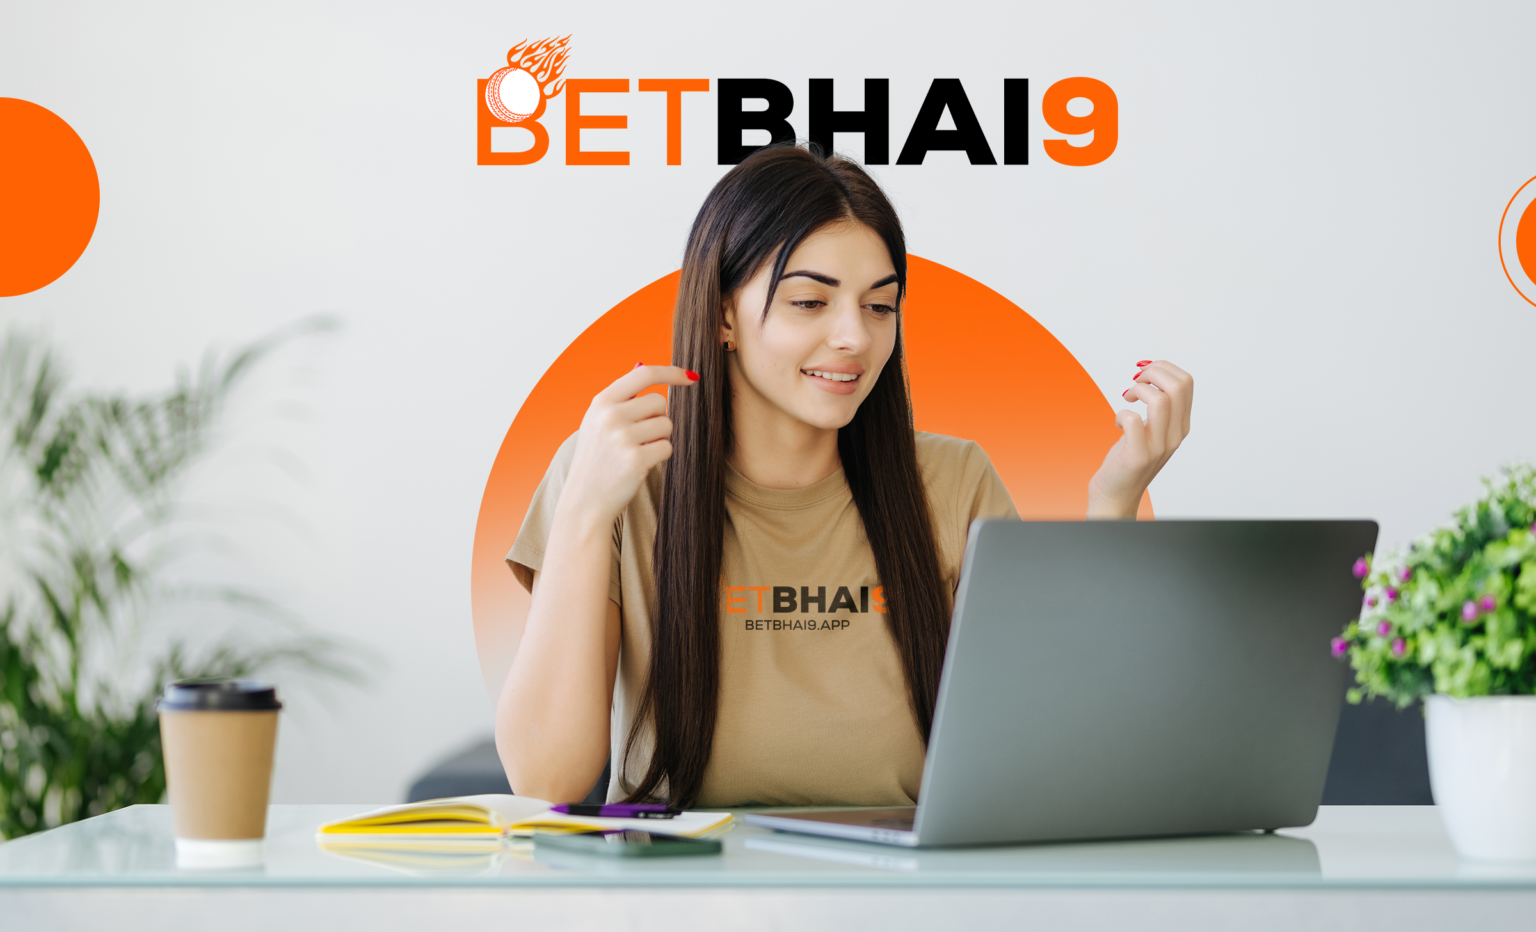 betbhai9 hack apk download